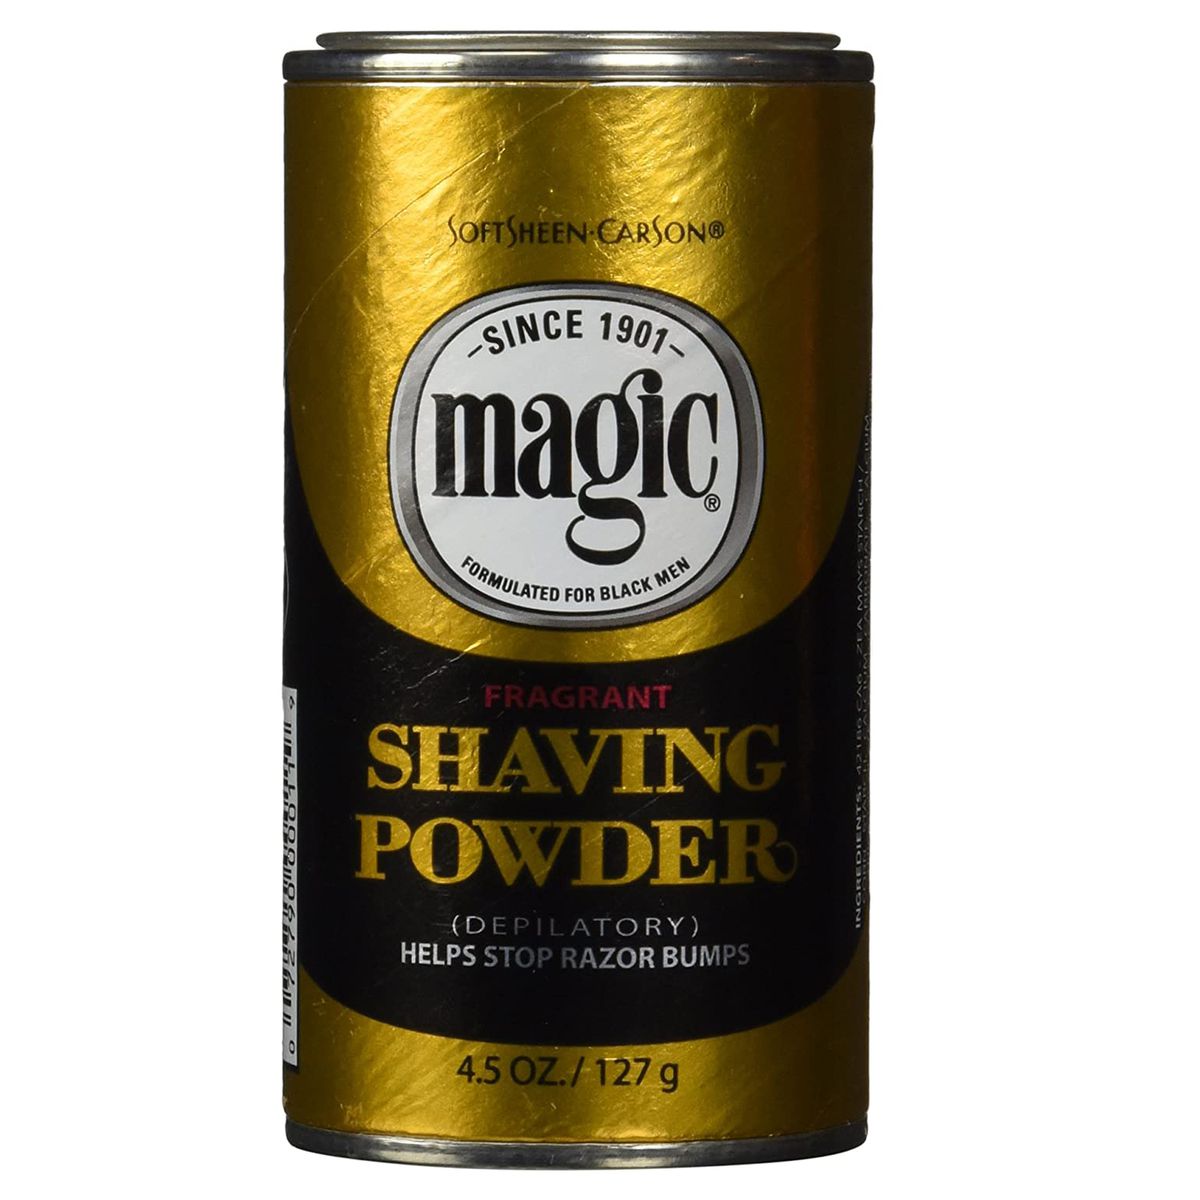 Softsheen-Carson Magic Razorless Shaving for Men